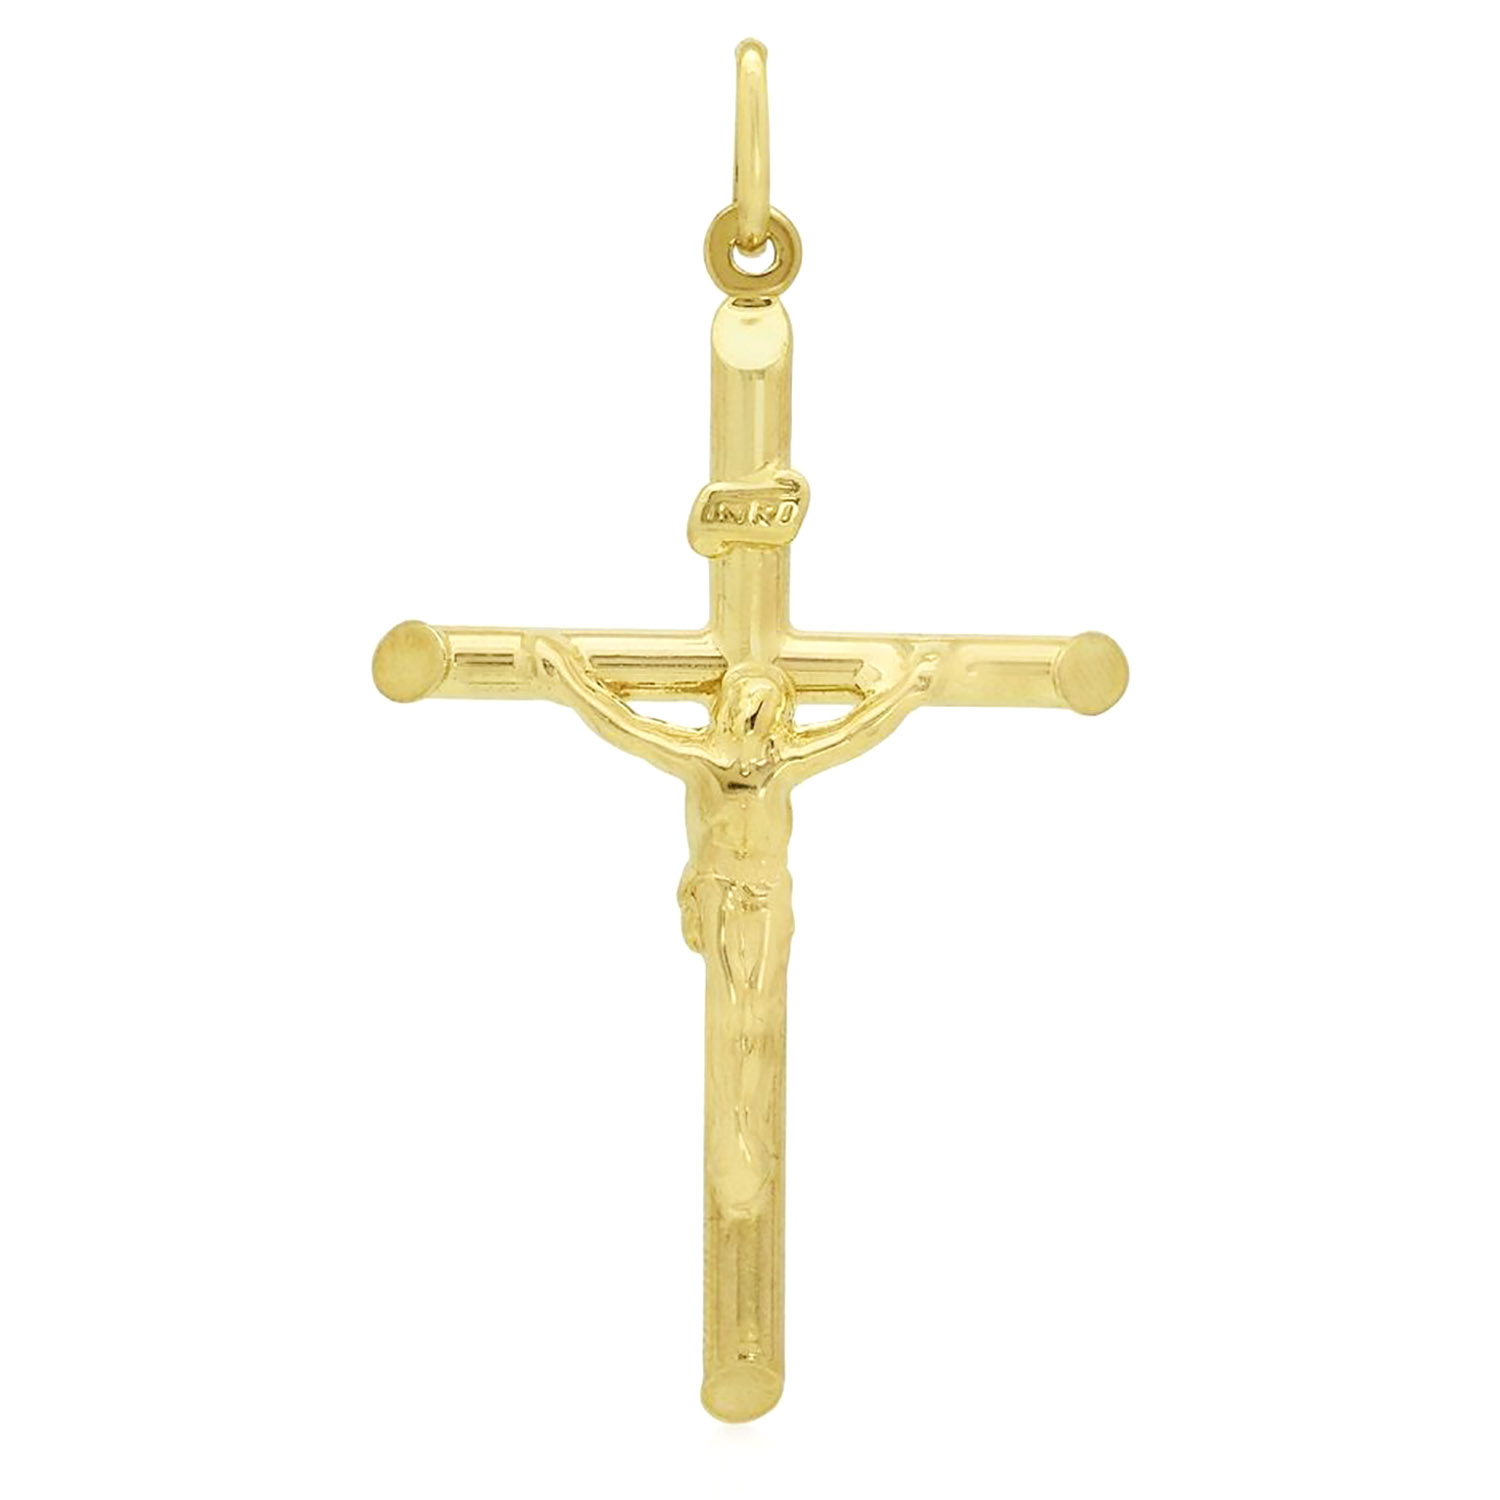 14k Yellow Gold Jesus Crucifix Cross Religious Charm Pendant INRI 2"